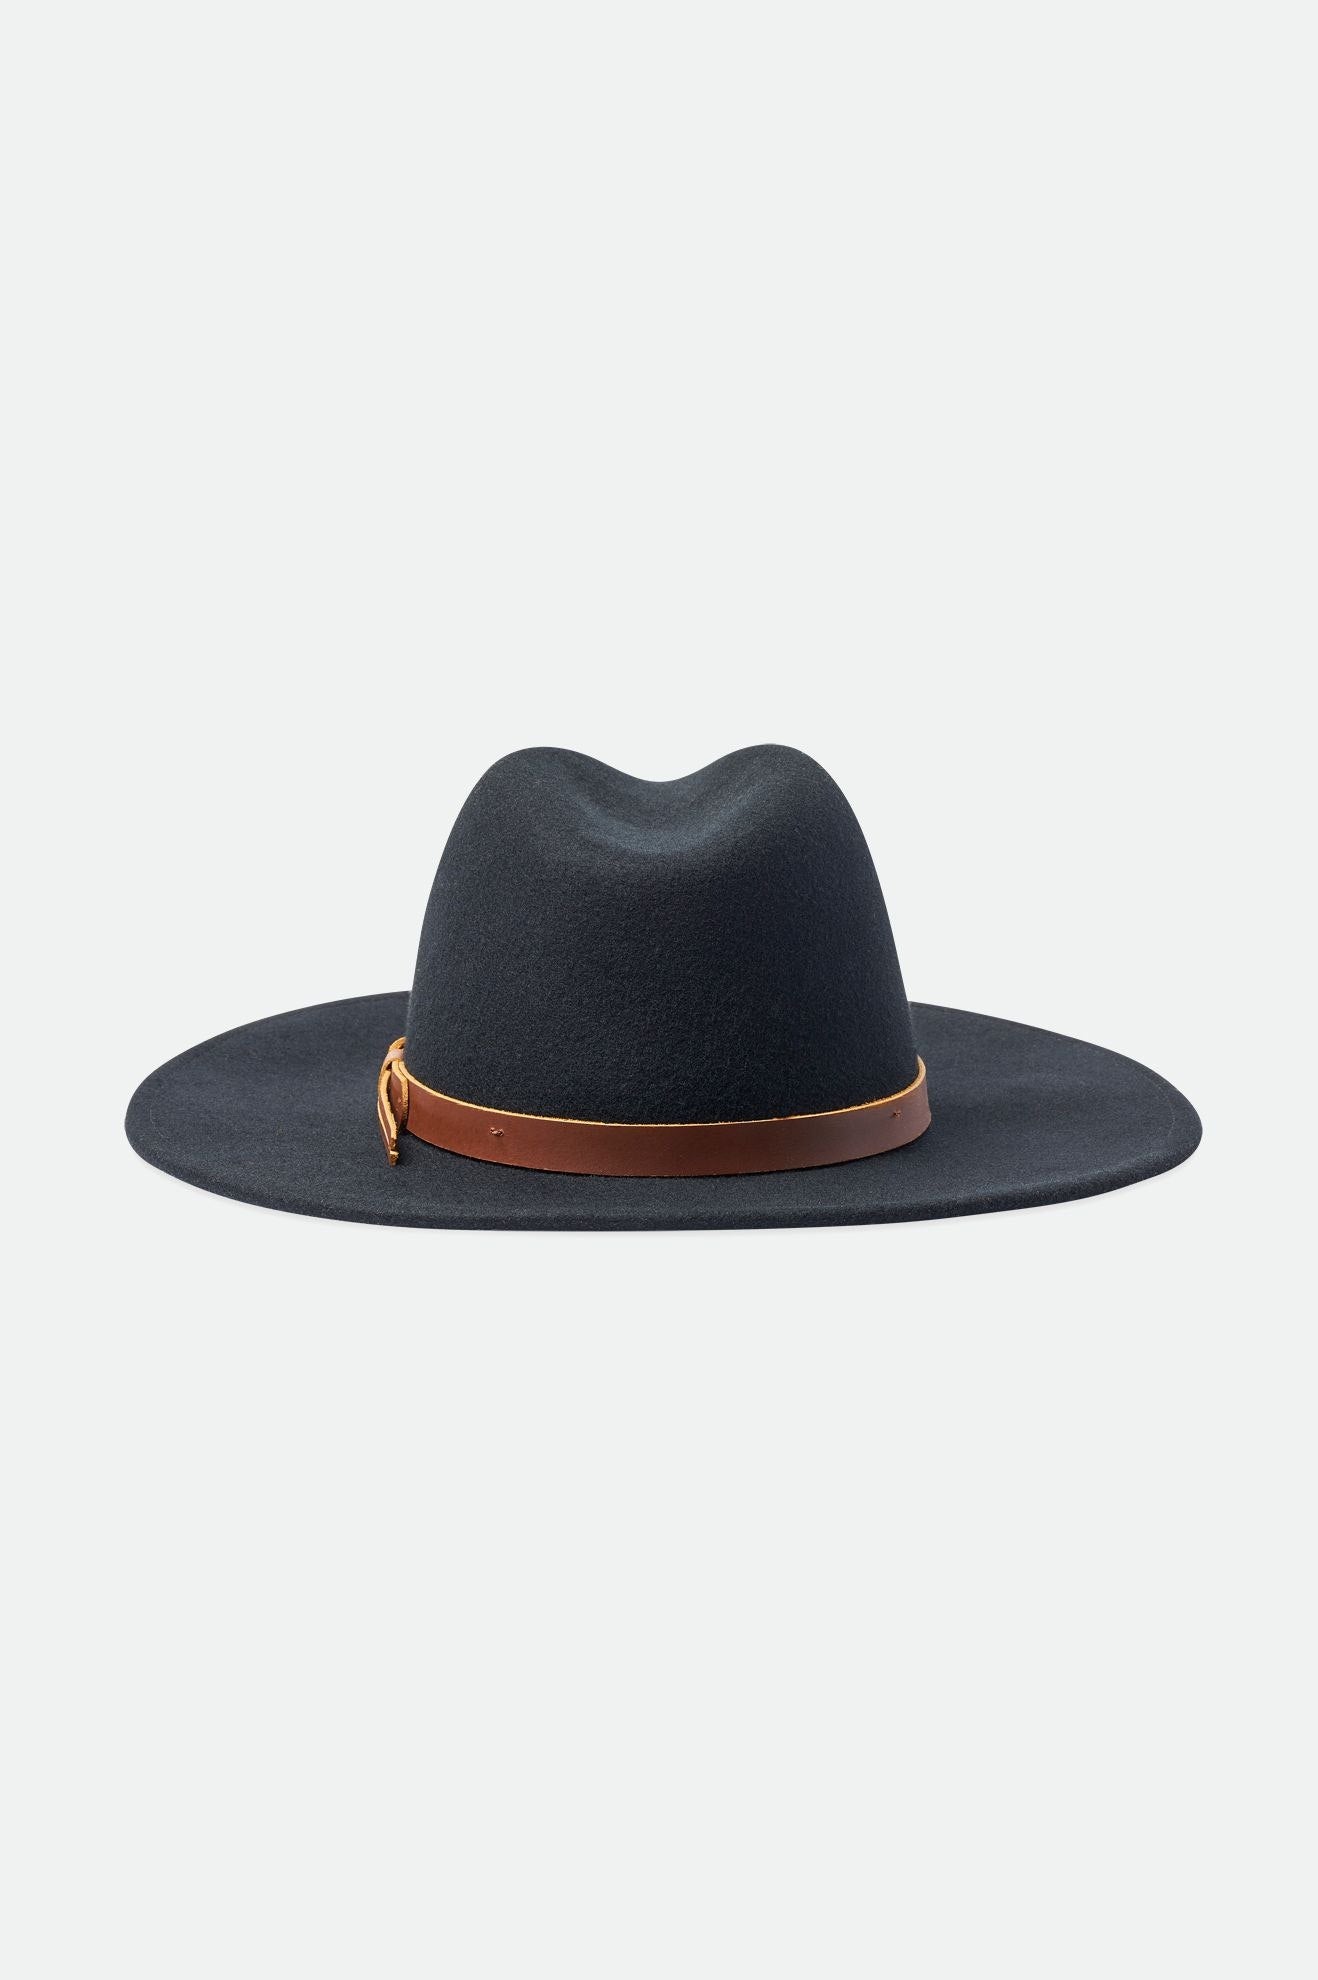 Black Wool Felt Fedora Hat With Feather Trim Size Medium 